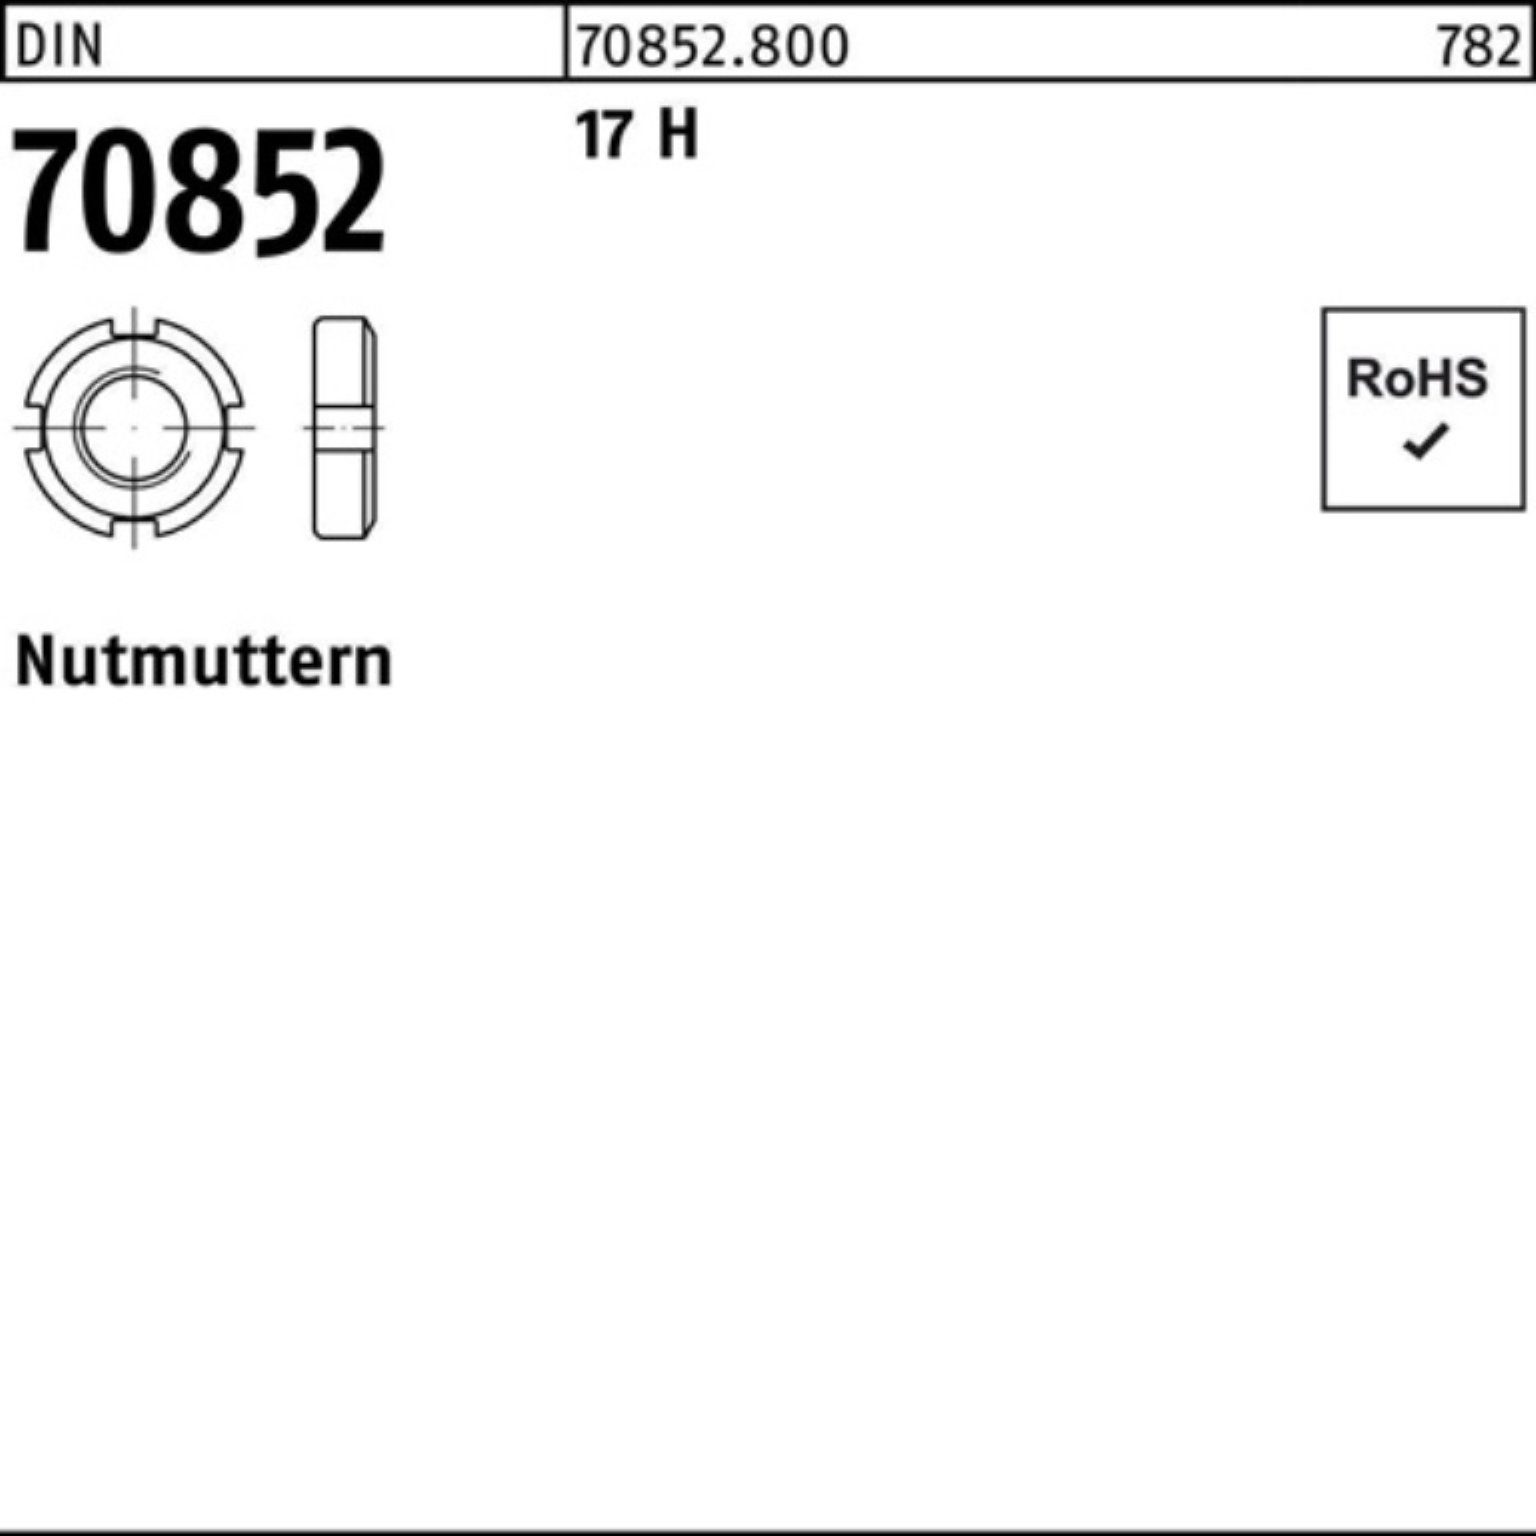 Reyher Nutmutter 100er Pack Nutmutter DIN 70852 M26x 1,5 17 H 10 Stück DIN 70852 17 H